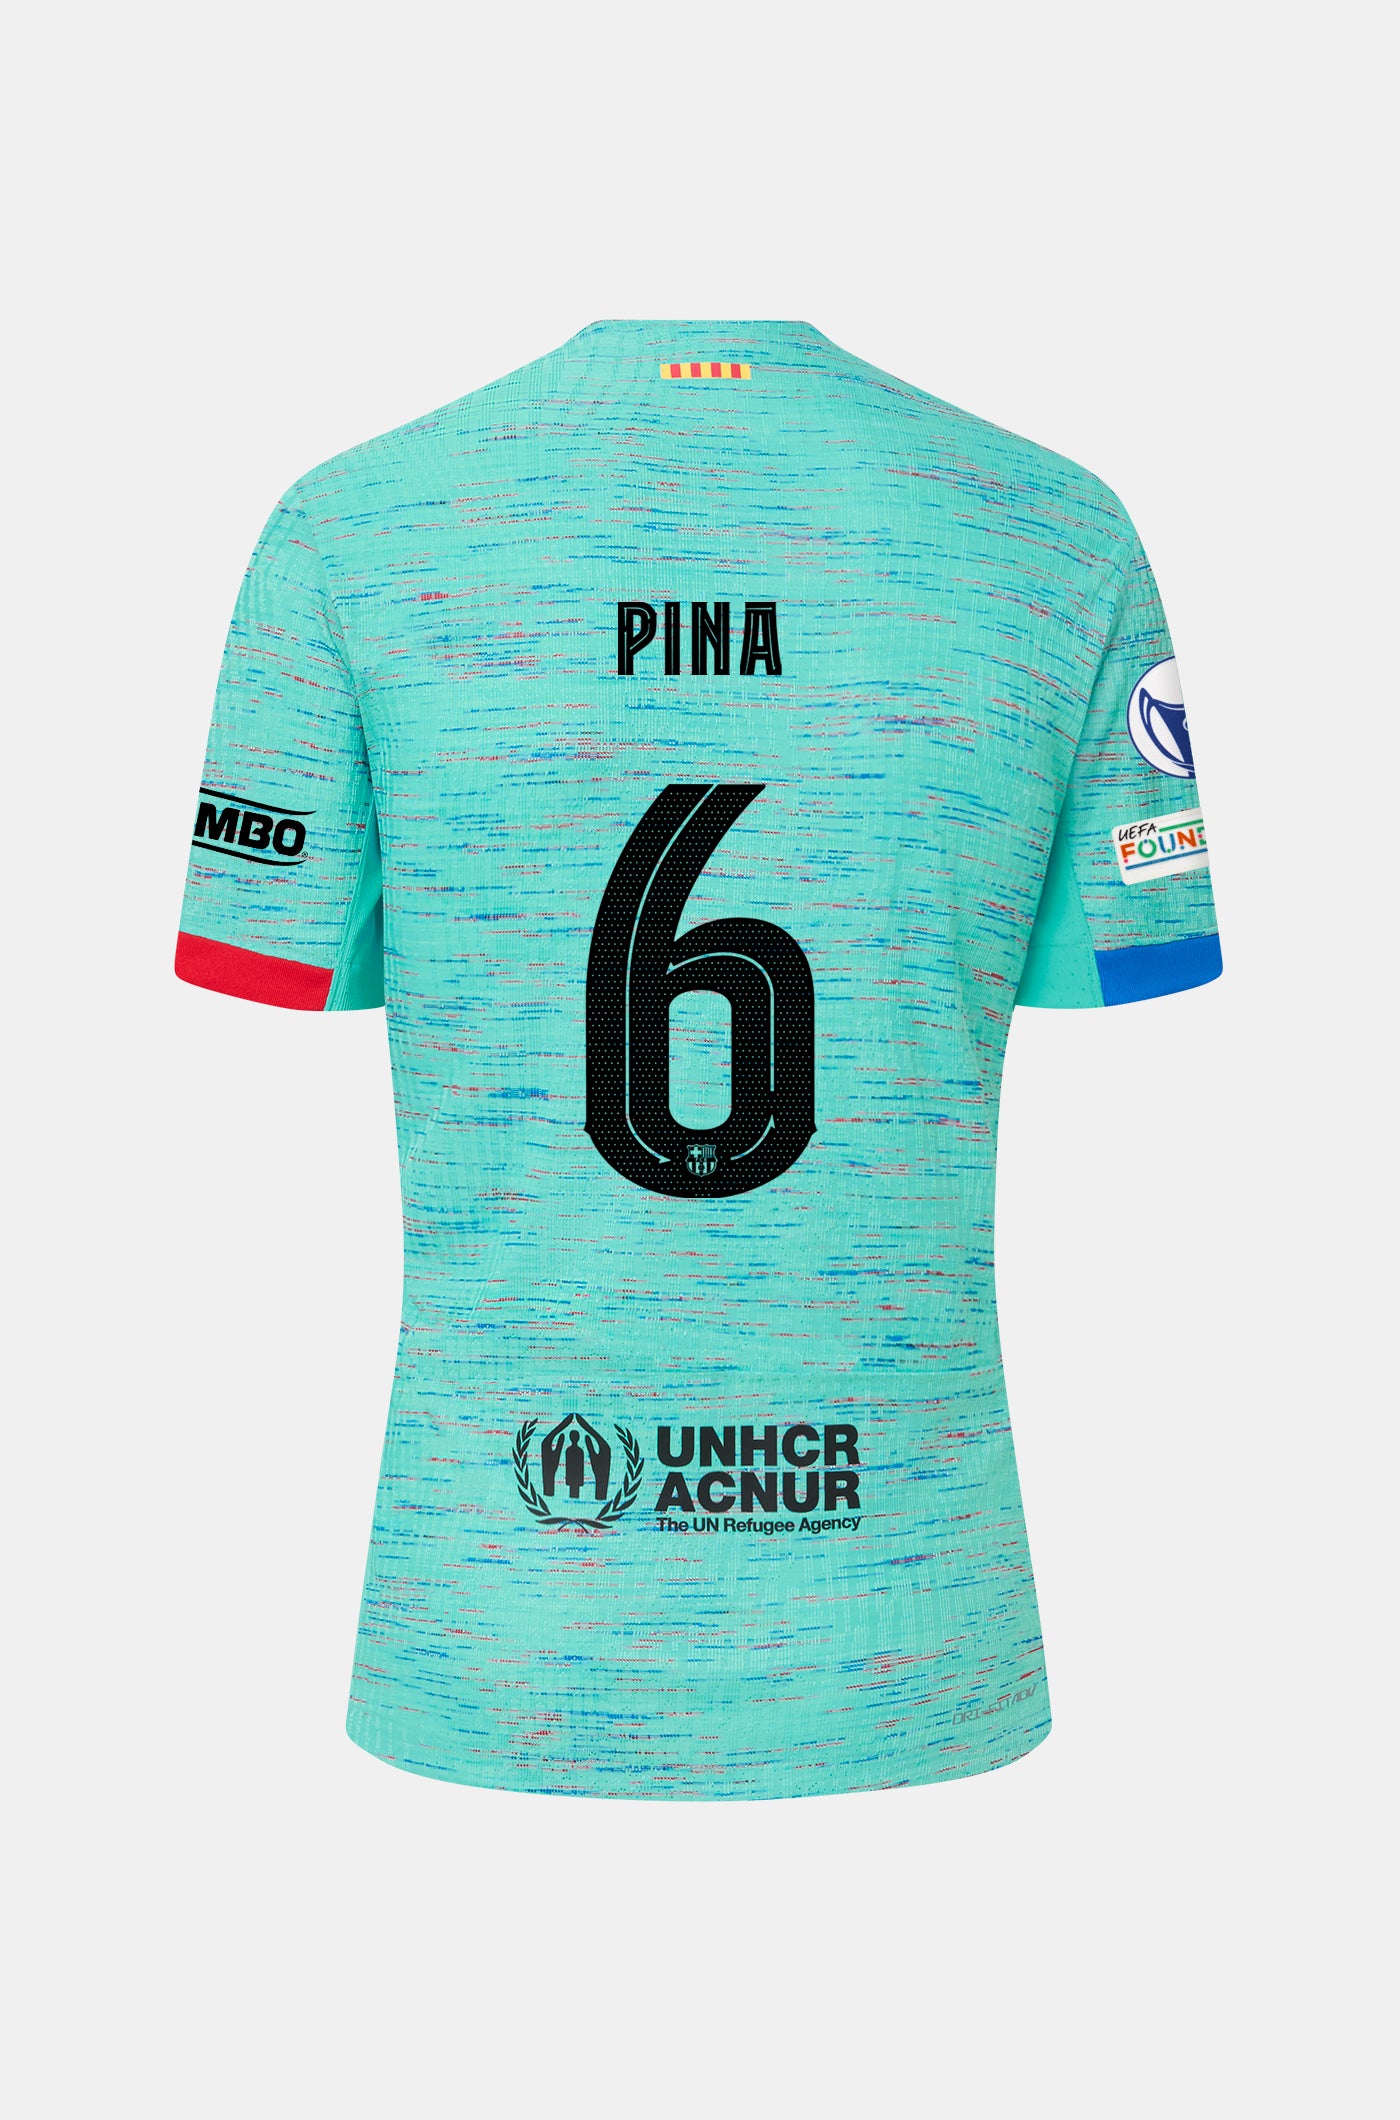 UWCL FC Barcelona third shirt 23/24 Player's Edition - PINA